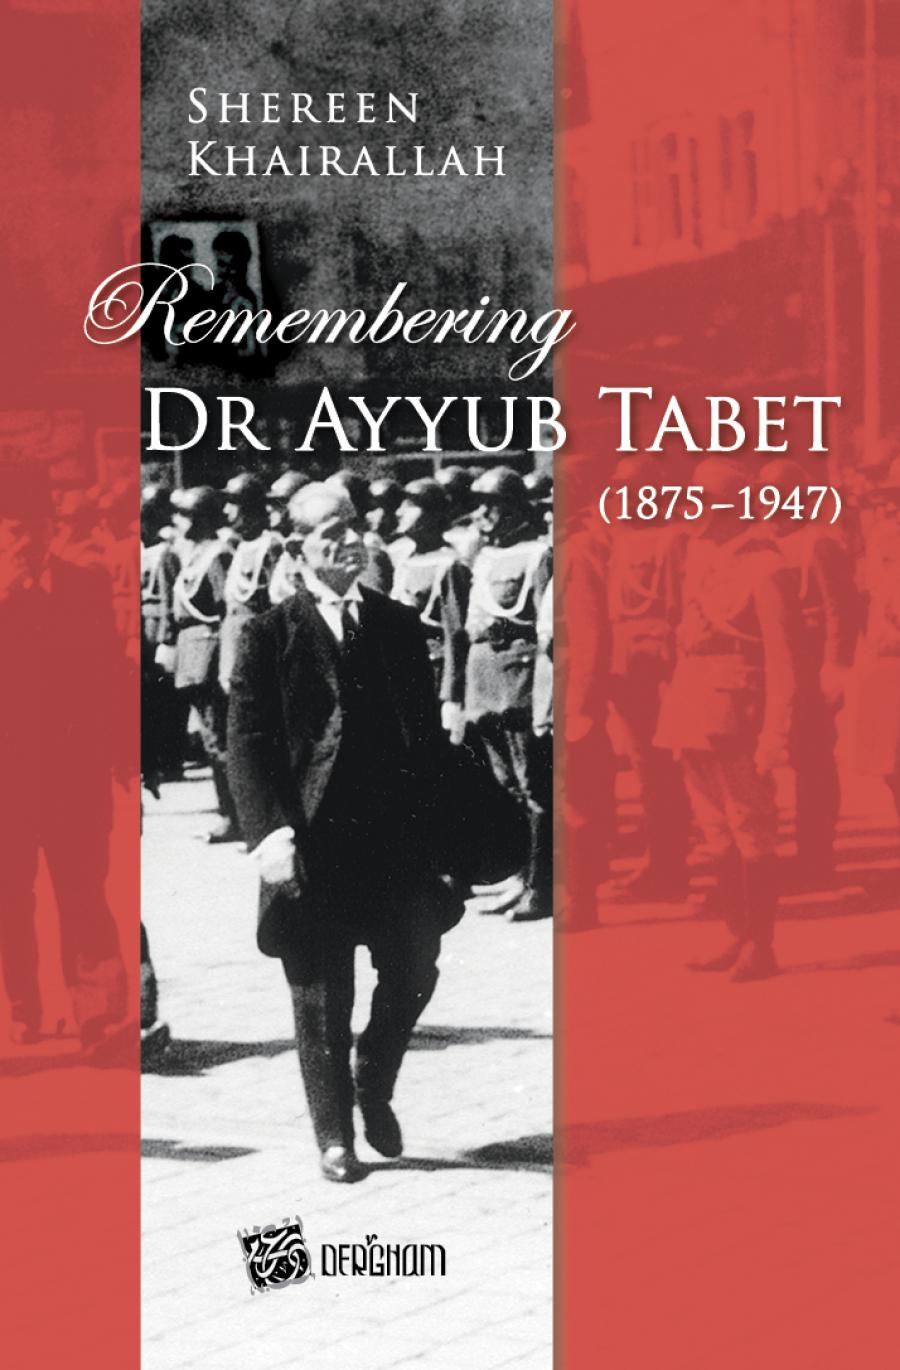 Shereen Khairallah, Remembering Dr Ayyub Tabet (1875-1947), Dergham, Beirut 2014 (extract).